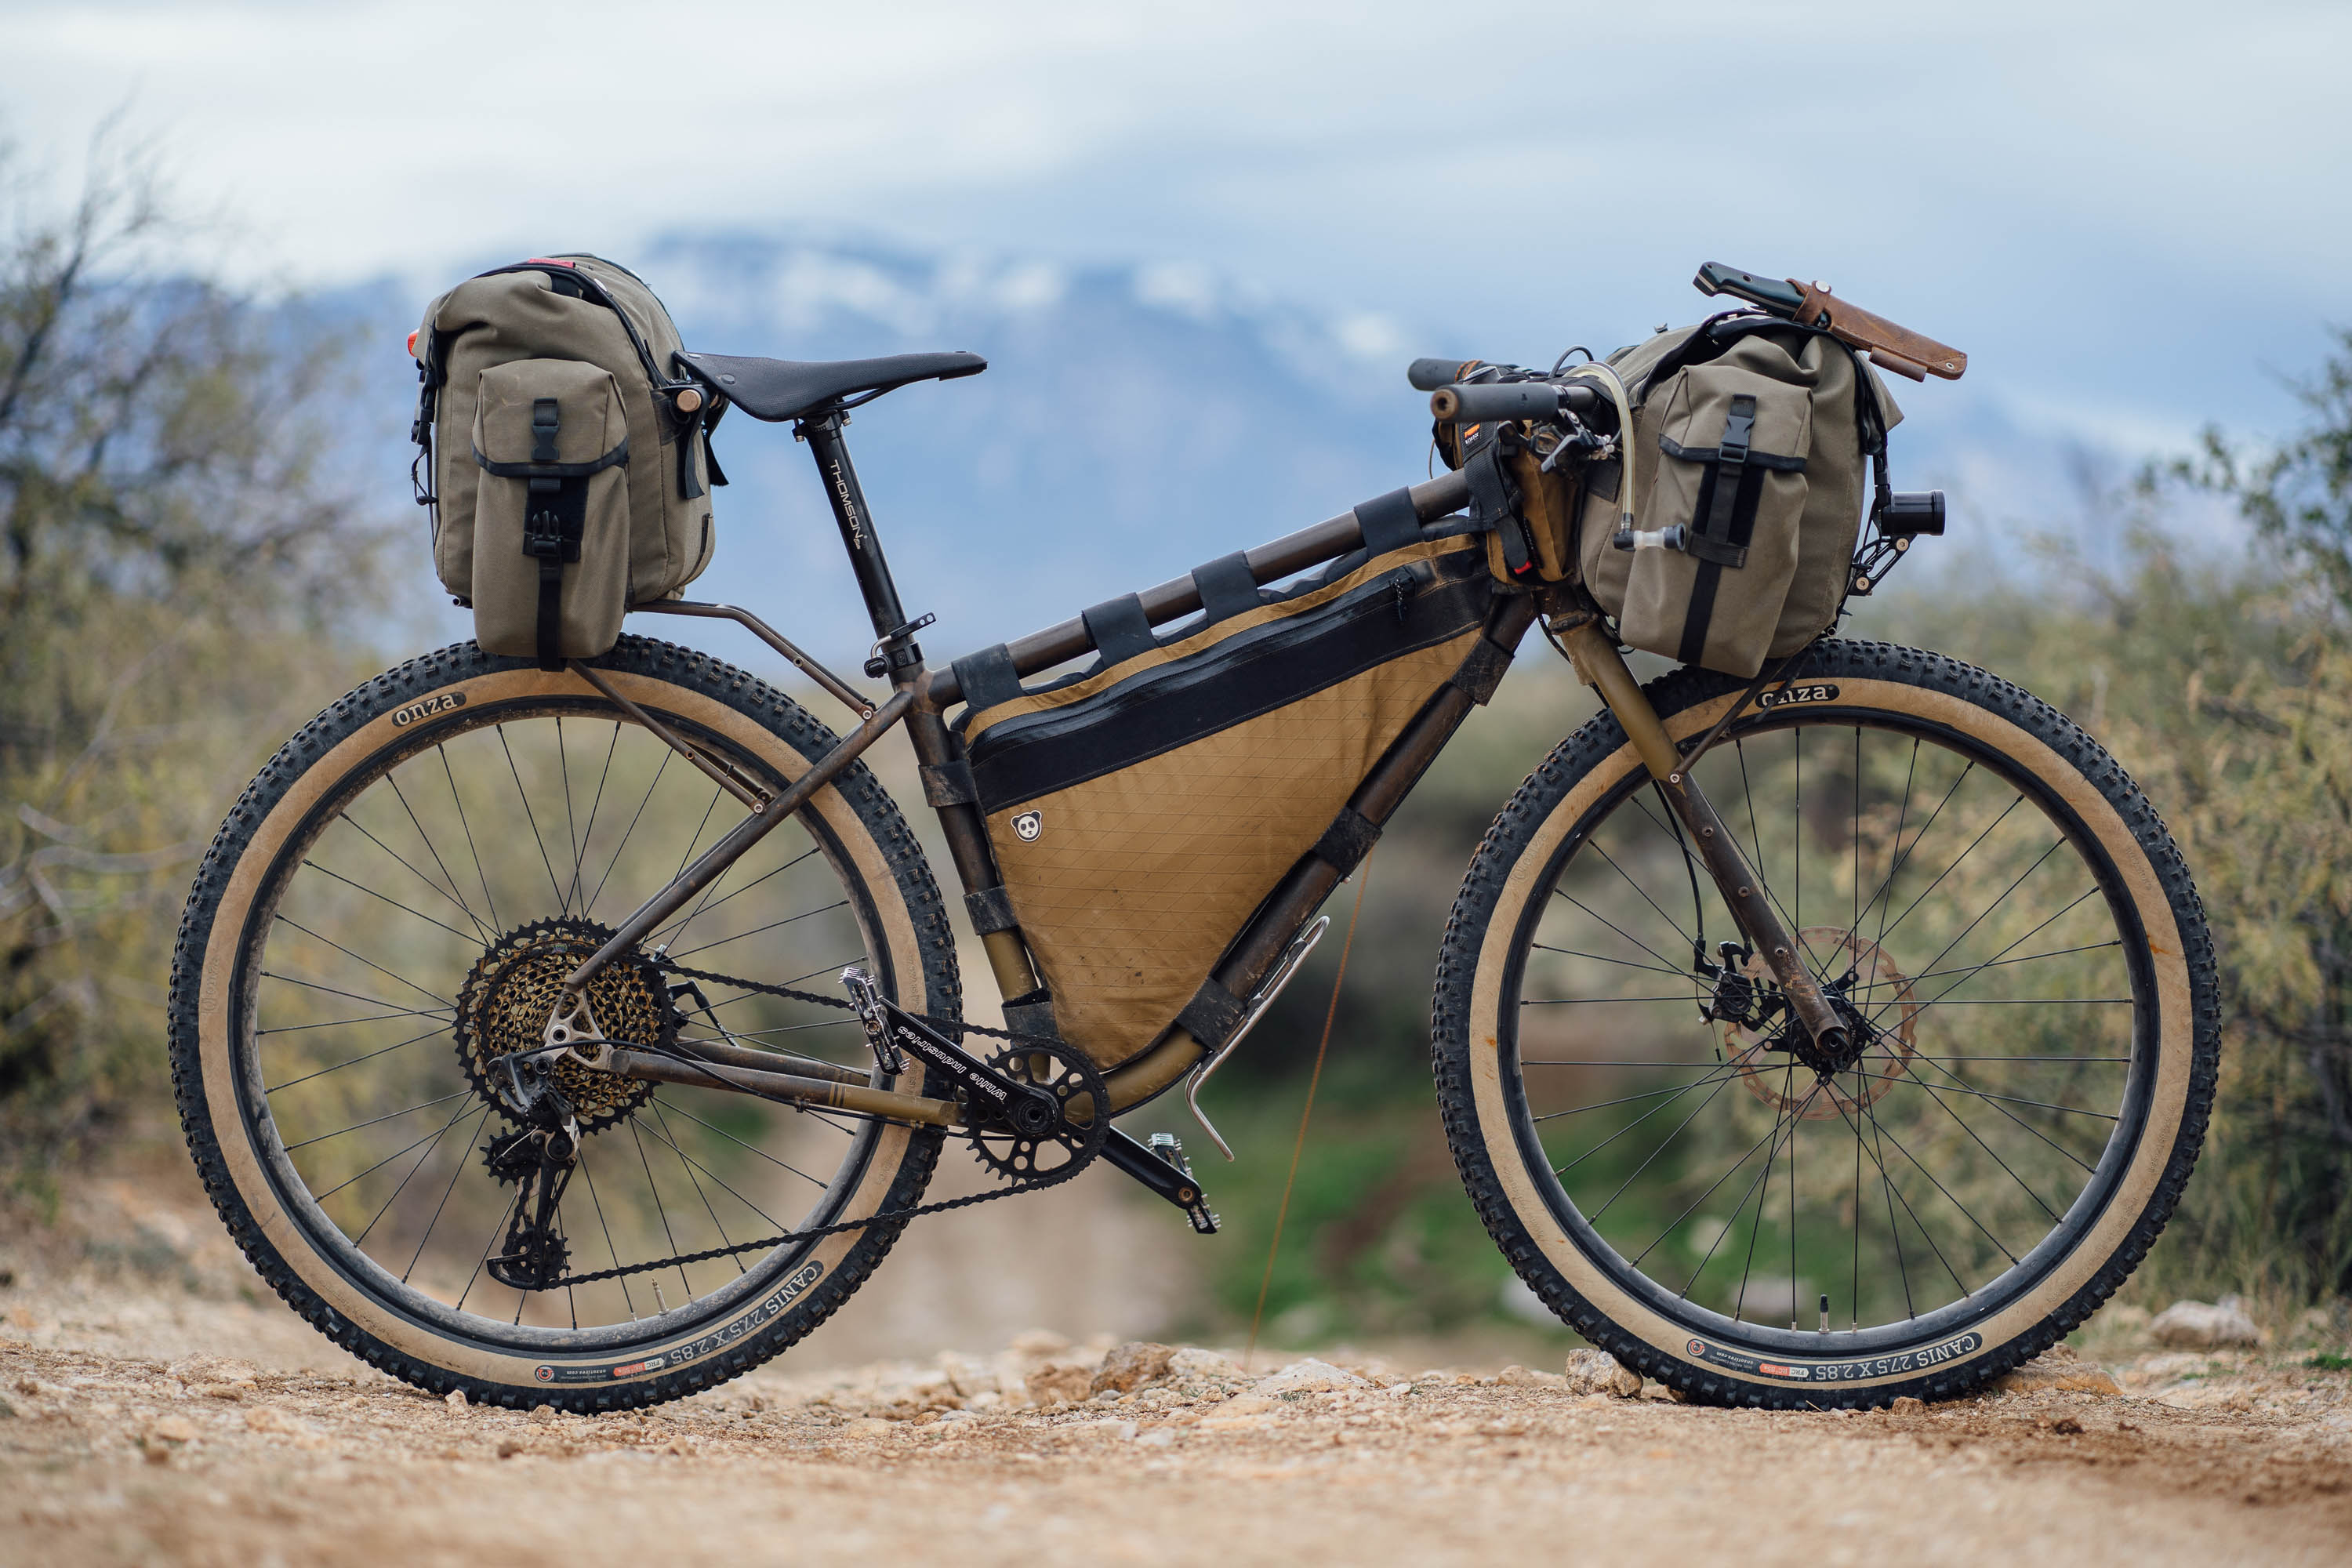 Hubert d'Autrement Madrean Cycles Bikepacking bike